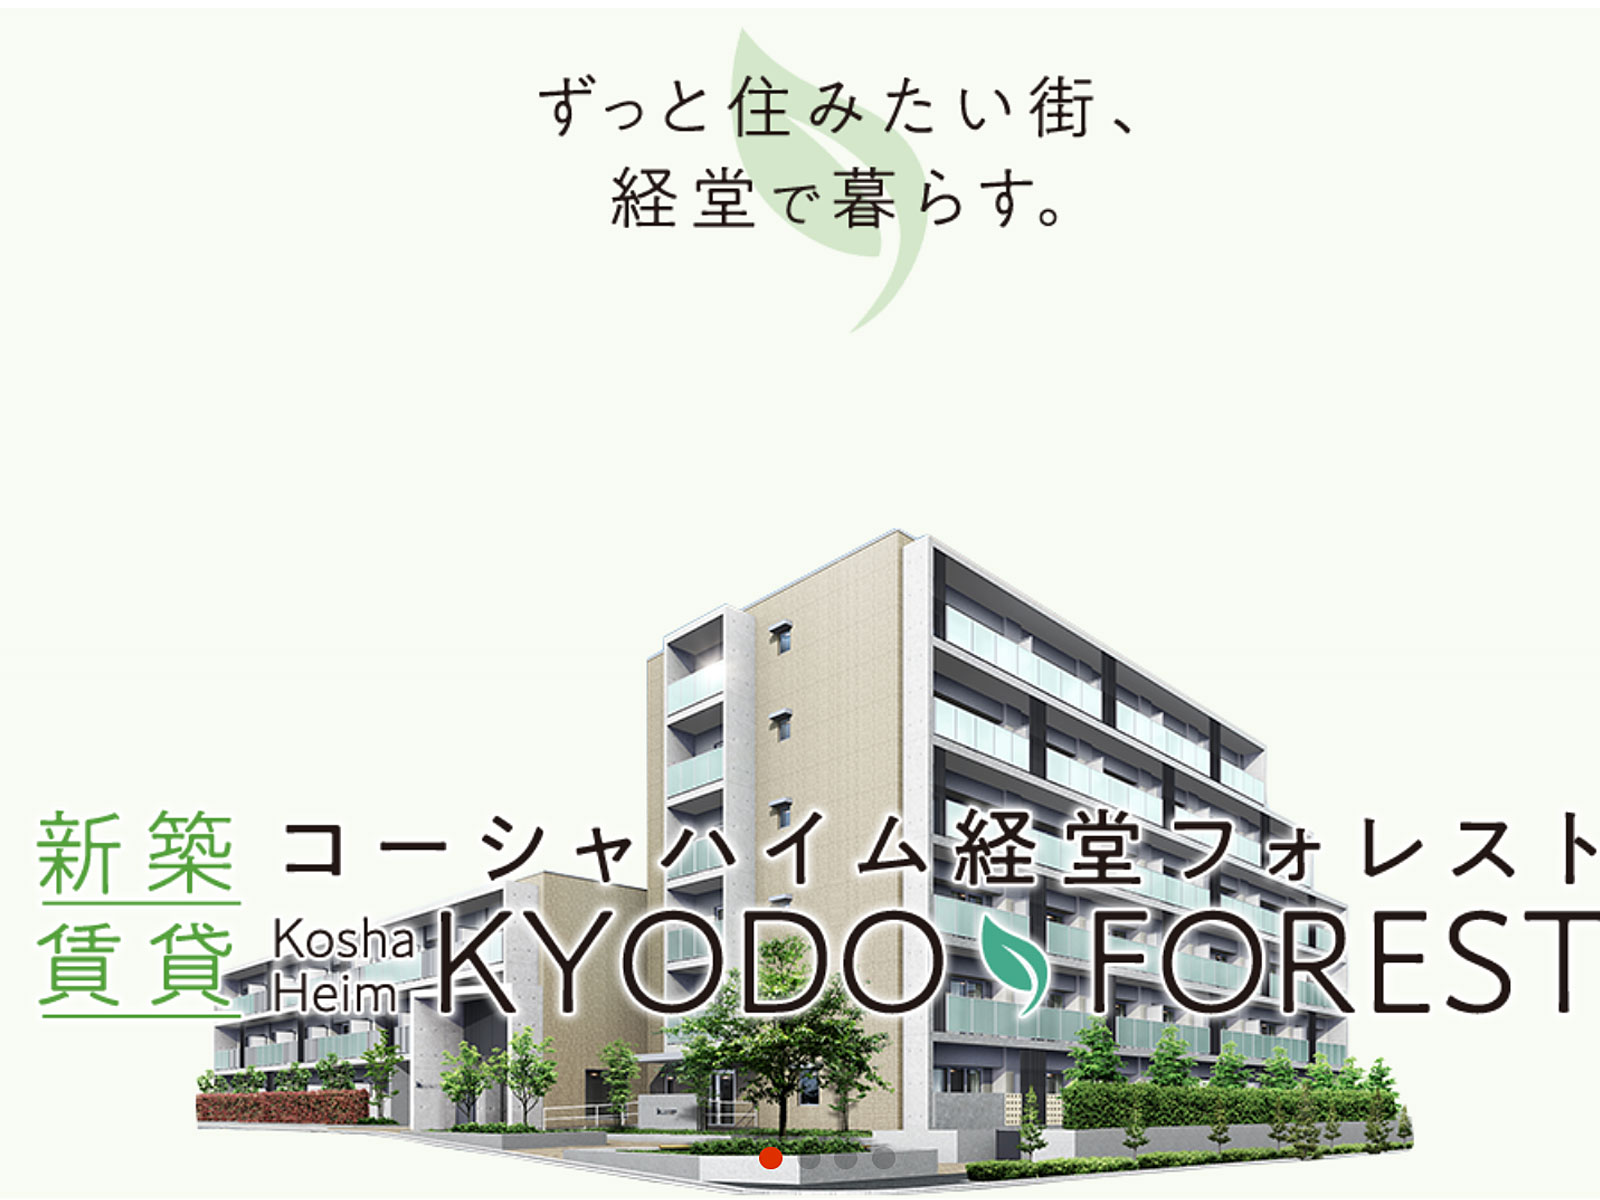 jkk東京の新築「コーシャハイム経堂フォレスト」が募集に向け建設中。